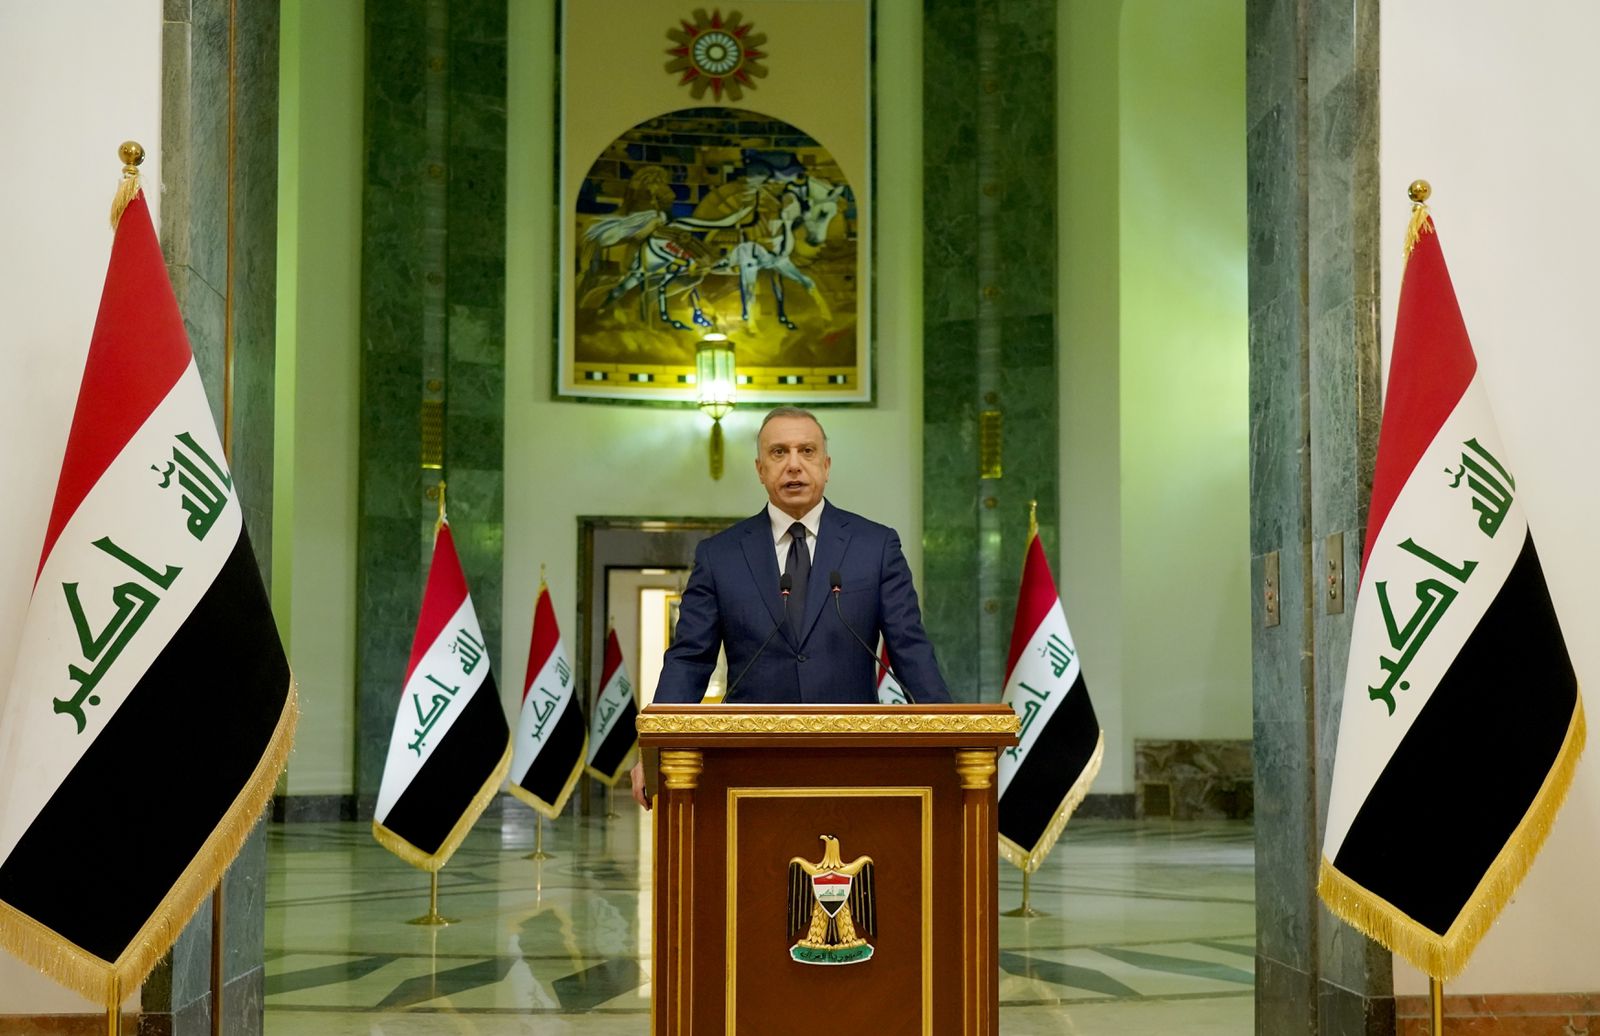 Al-Kadhimi: the current crisis is the worst in Iraq's post-Saddam history 